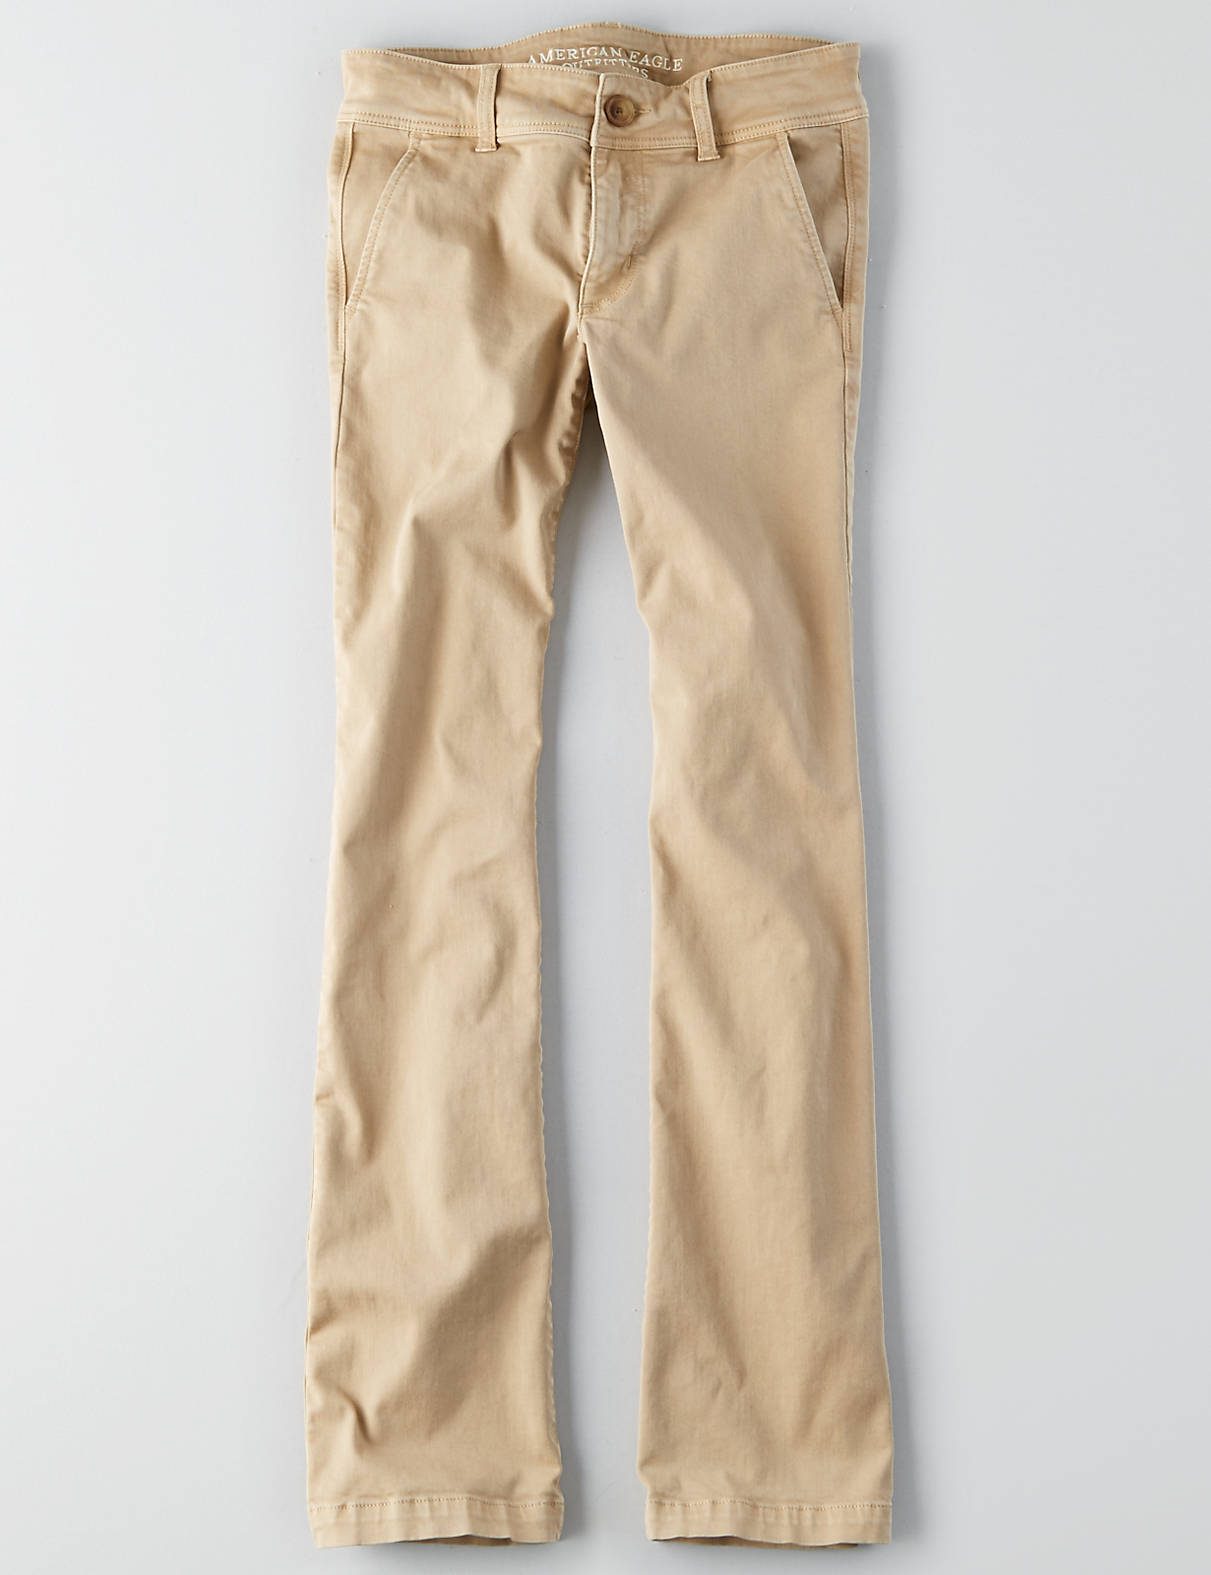 khaki pants for women display product reviews for aeo denim x kick boot pant NOFXOJR